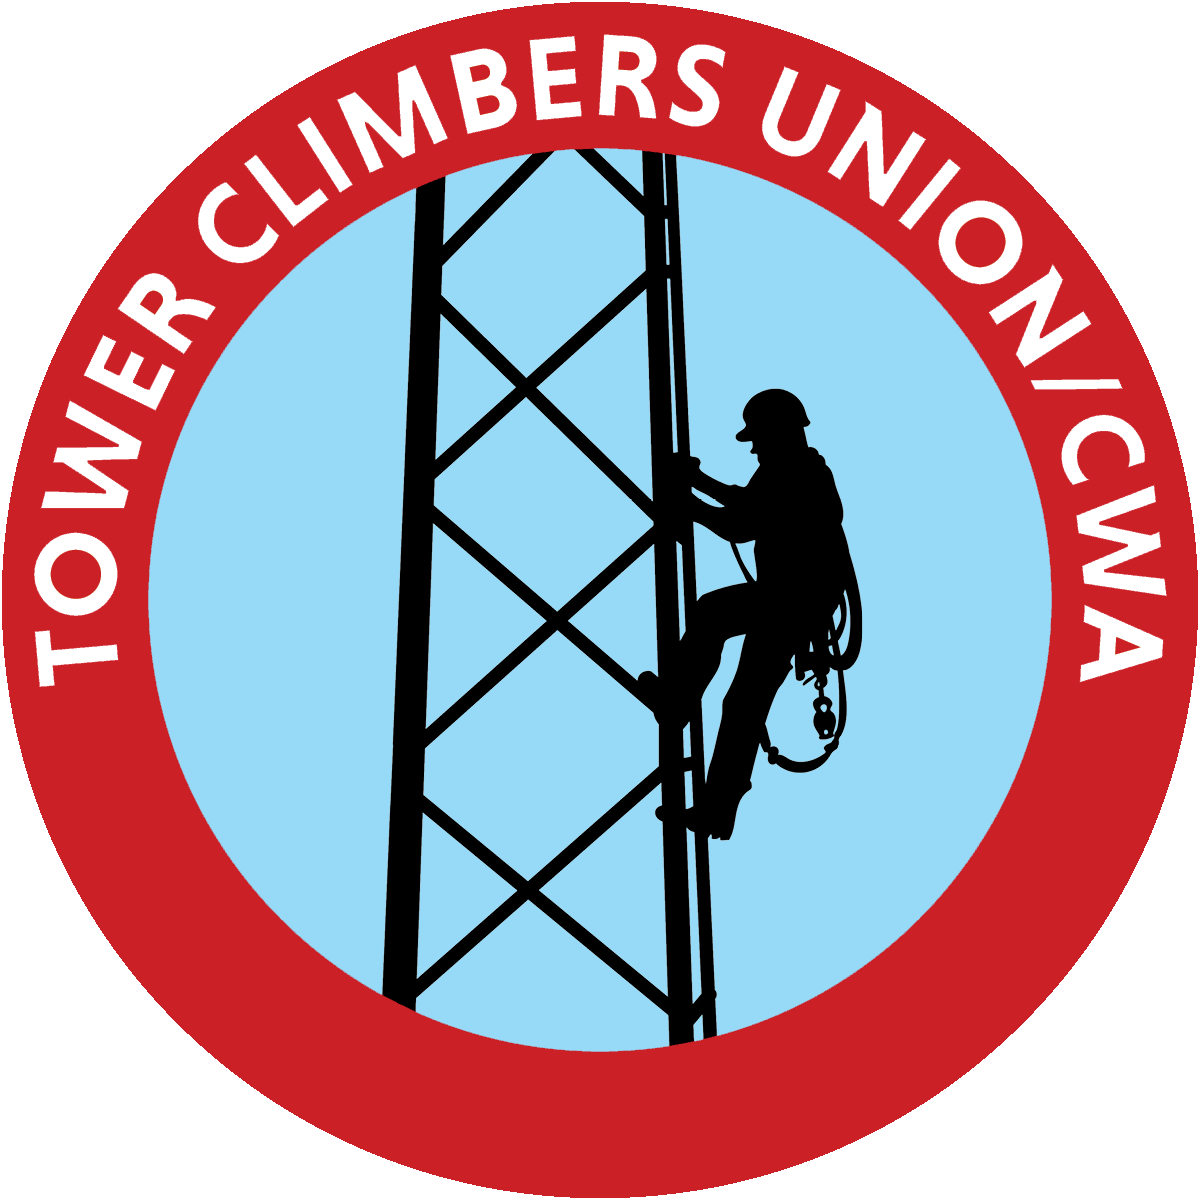 Tower Climbers Union/CWA